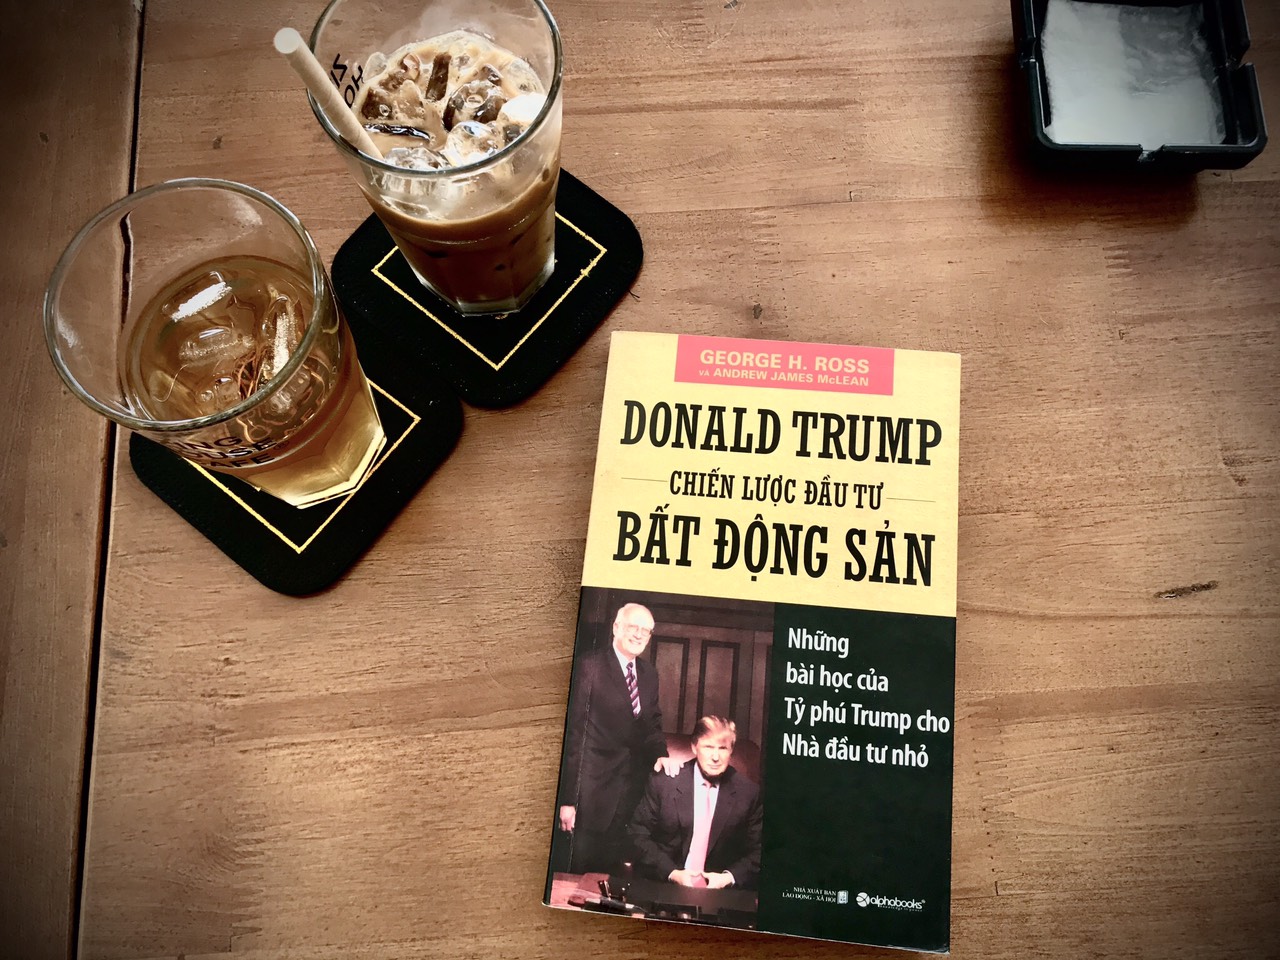 Donald Trump Chien Luoc Dau Tu Bat Dong San George H. Ross